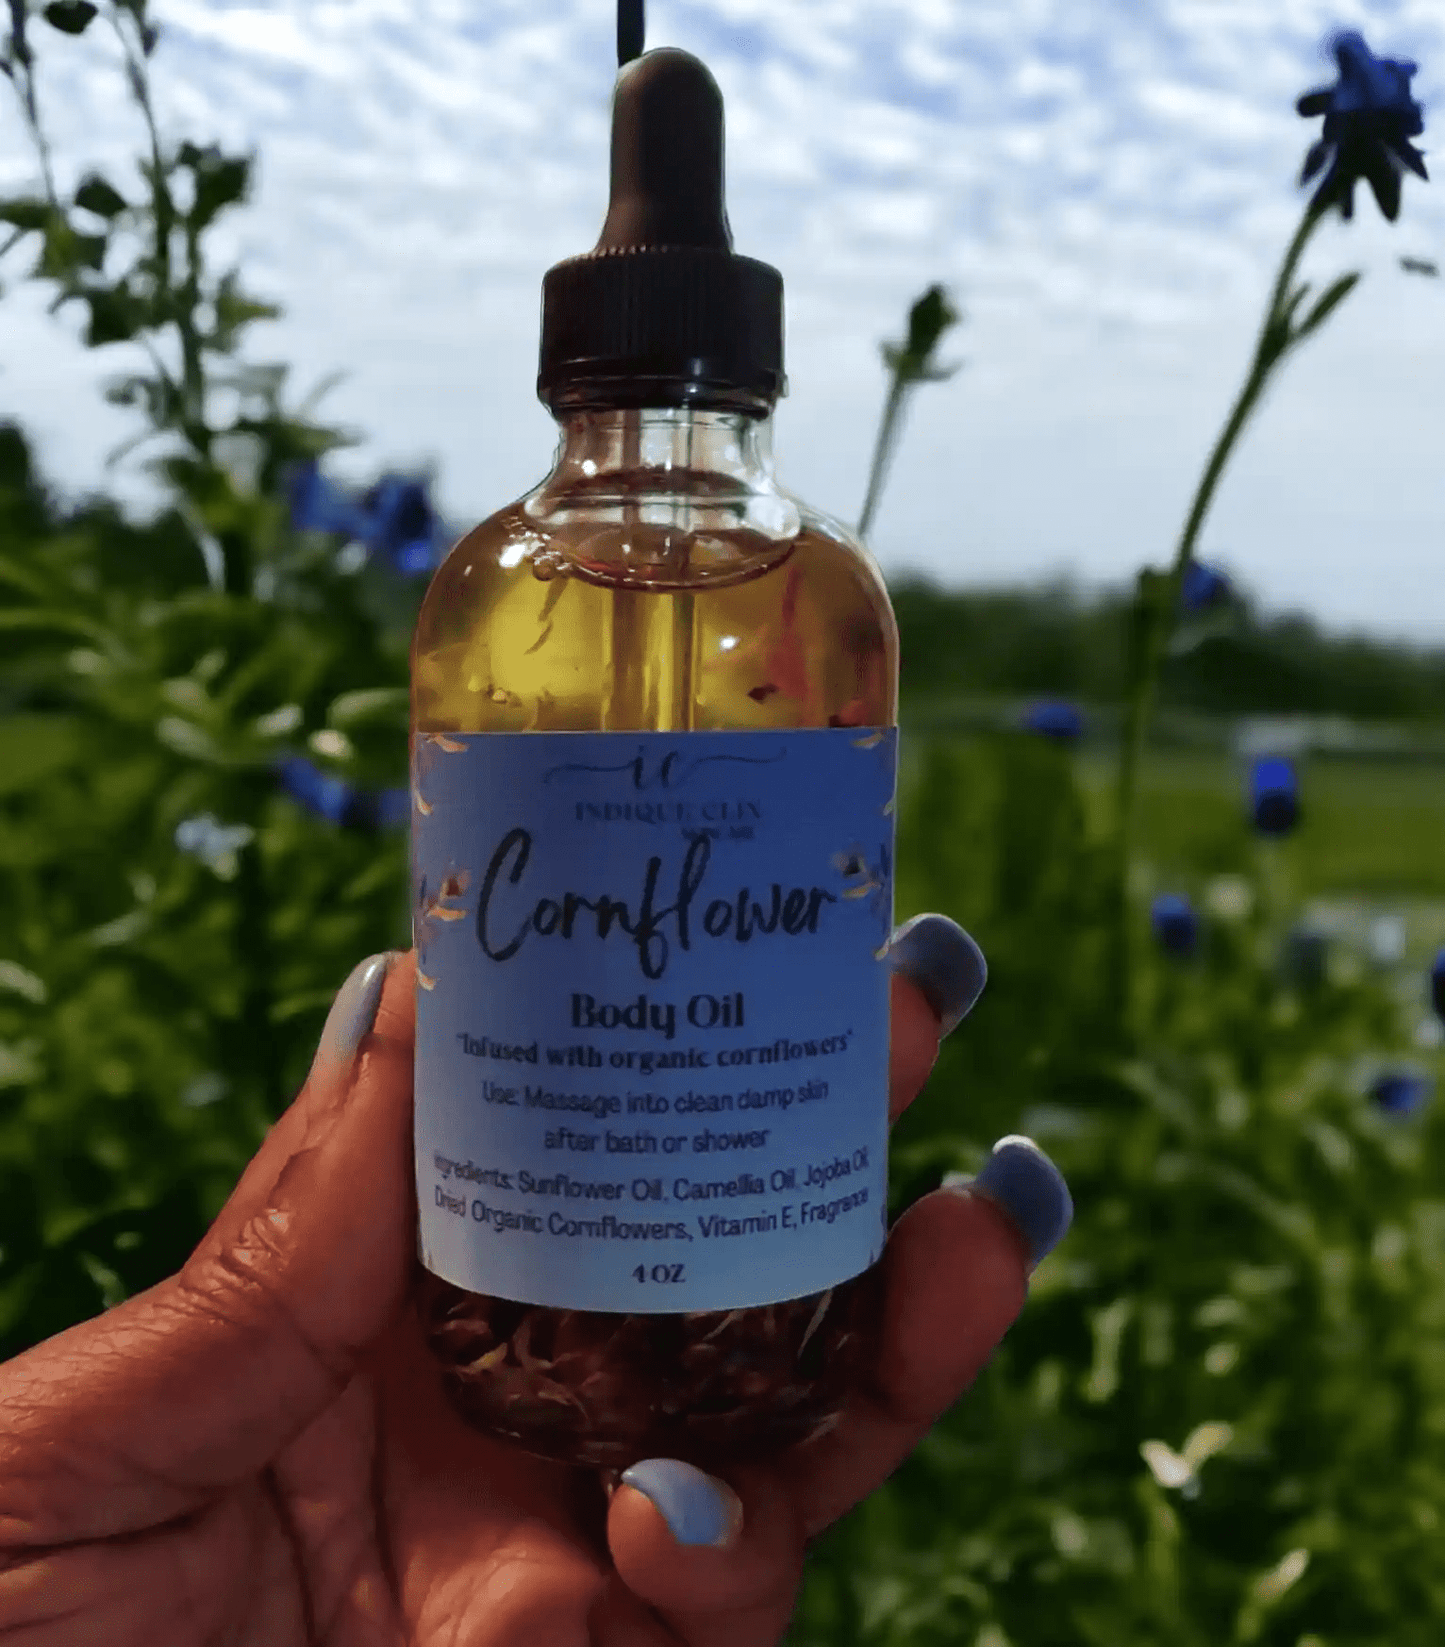 Bottle of cornflower infused body oil